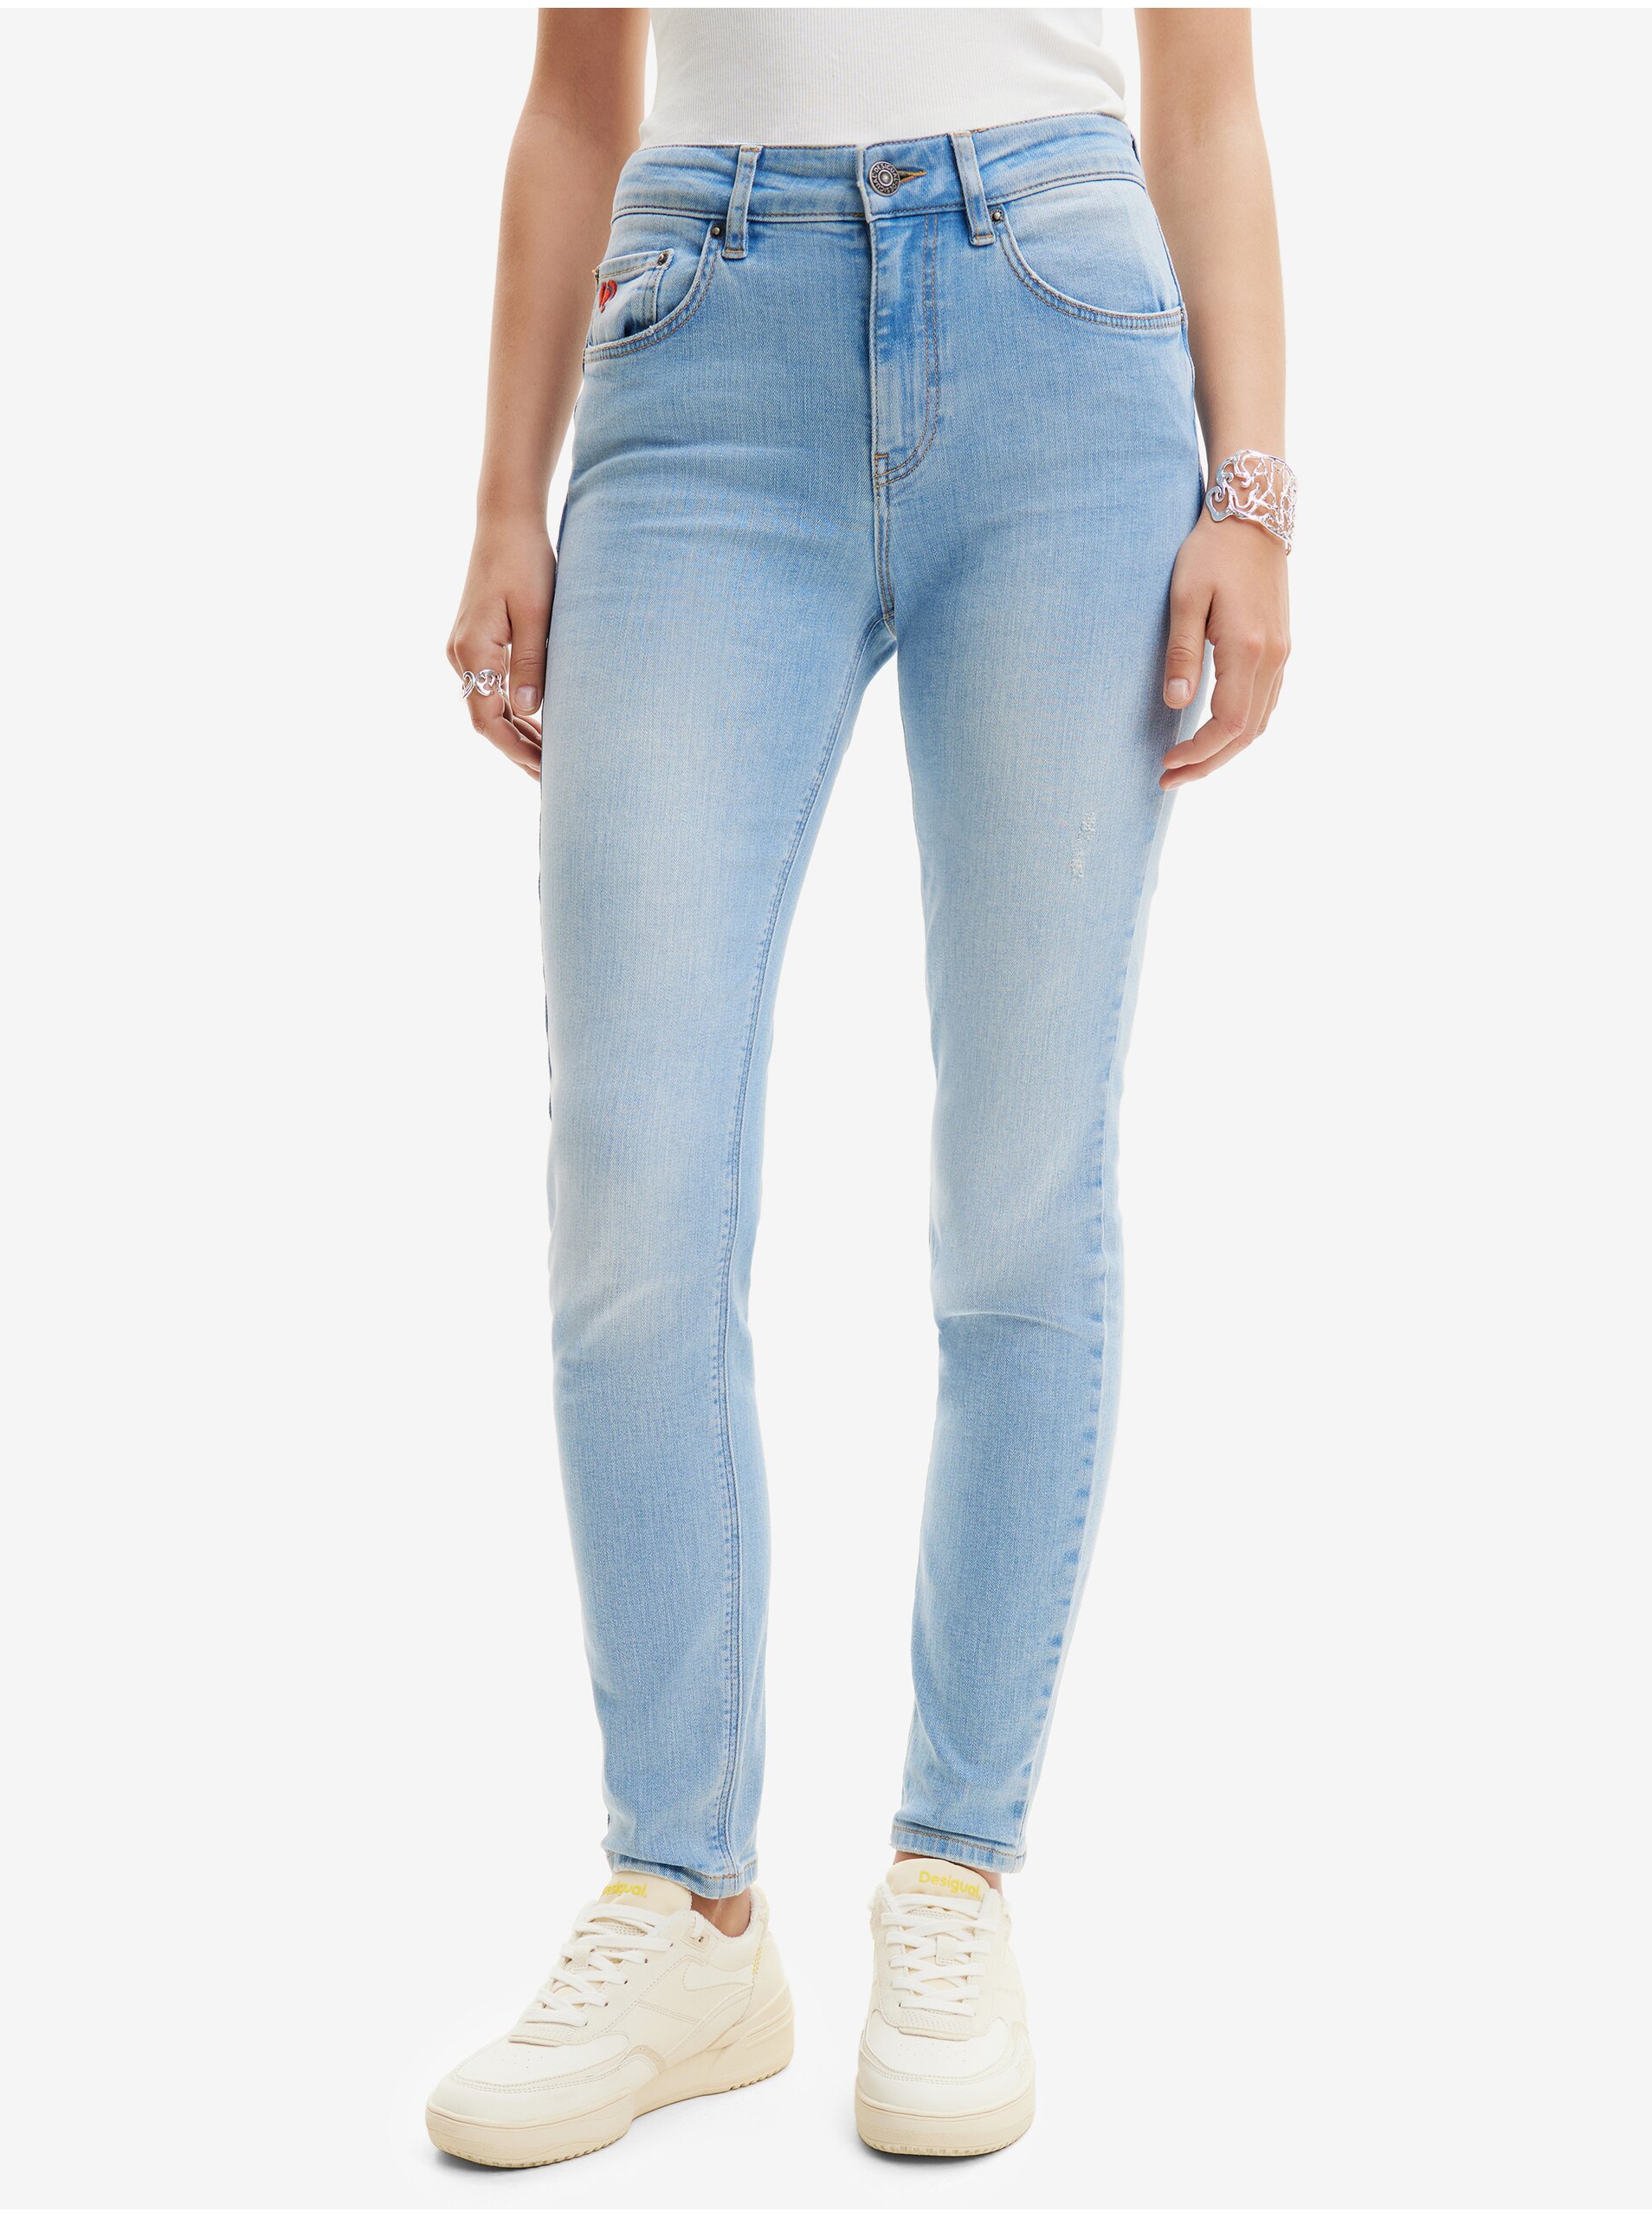 Women's jeans DESIGUAL